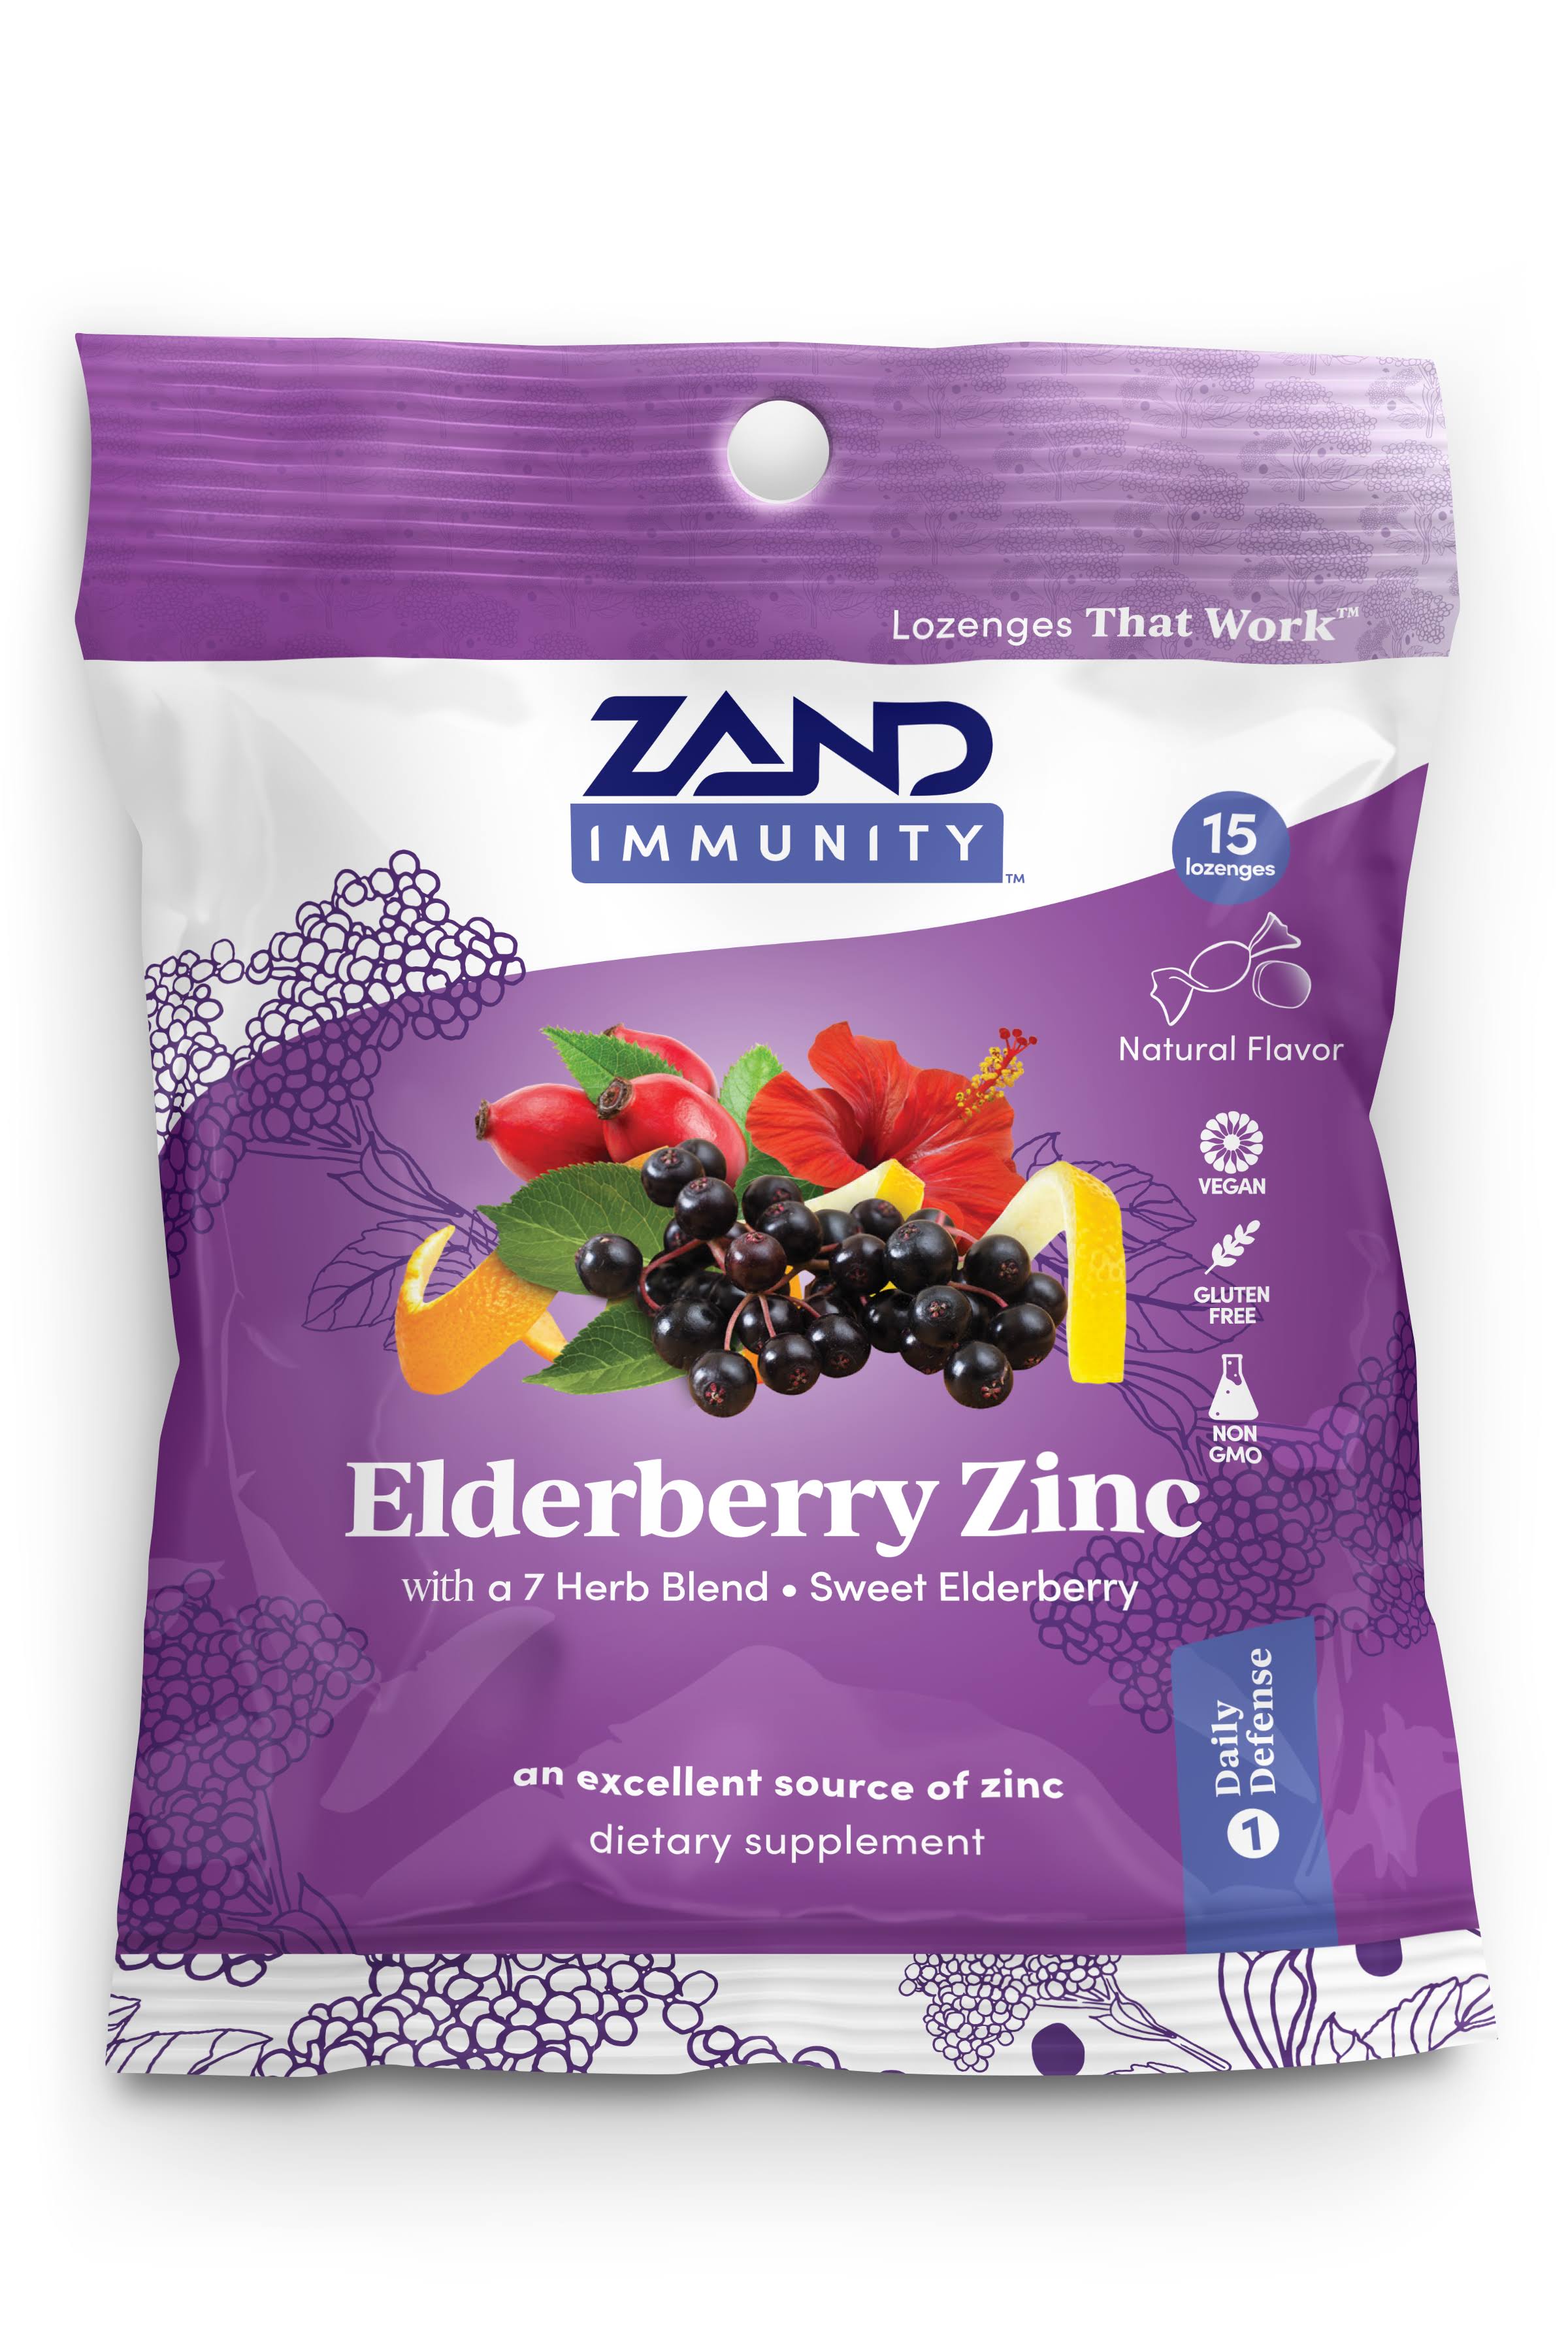 Zand, Elderberry Zinc, Herbalozenge, Sweet Elderberry, 15 Lozenges